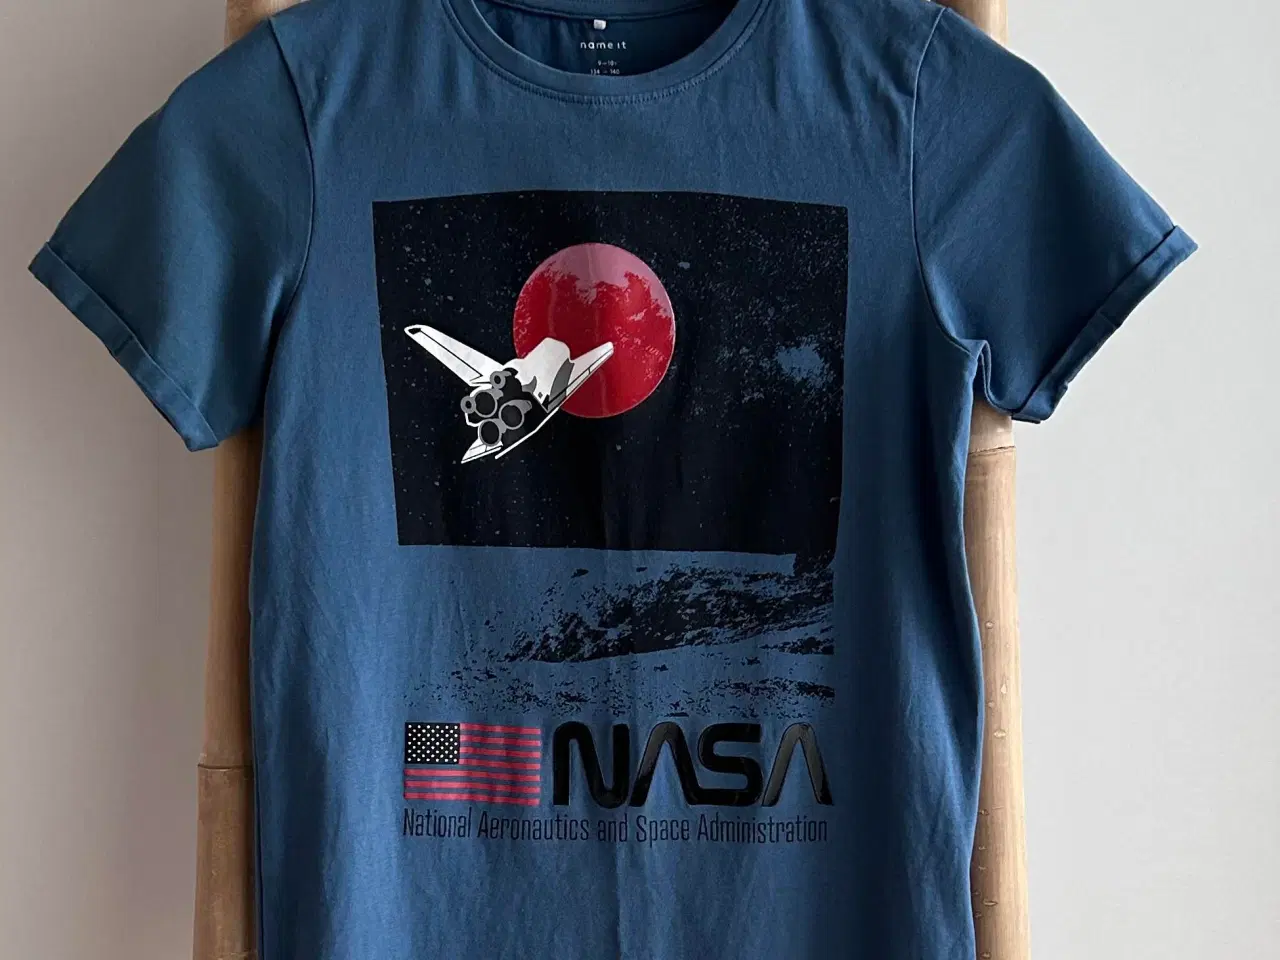 Billede 1 - Name It, 'NASA', t-shirt str. 134-140 - NY!